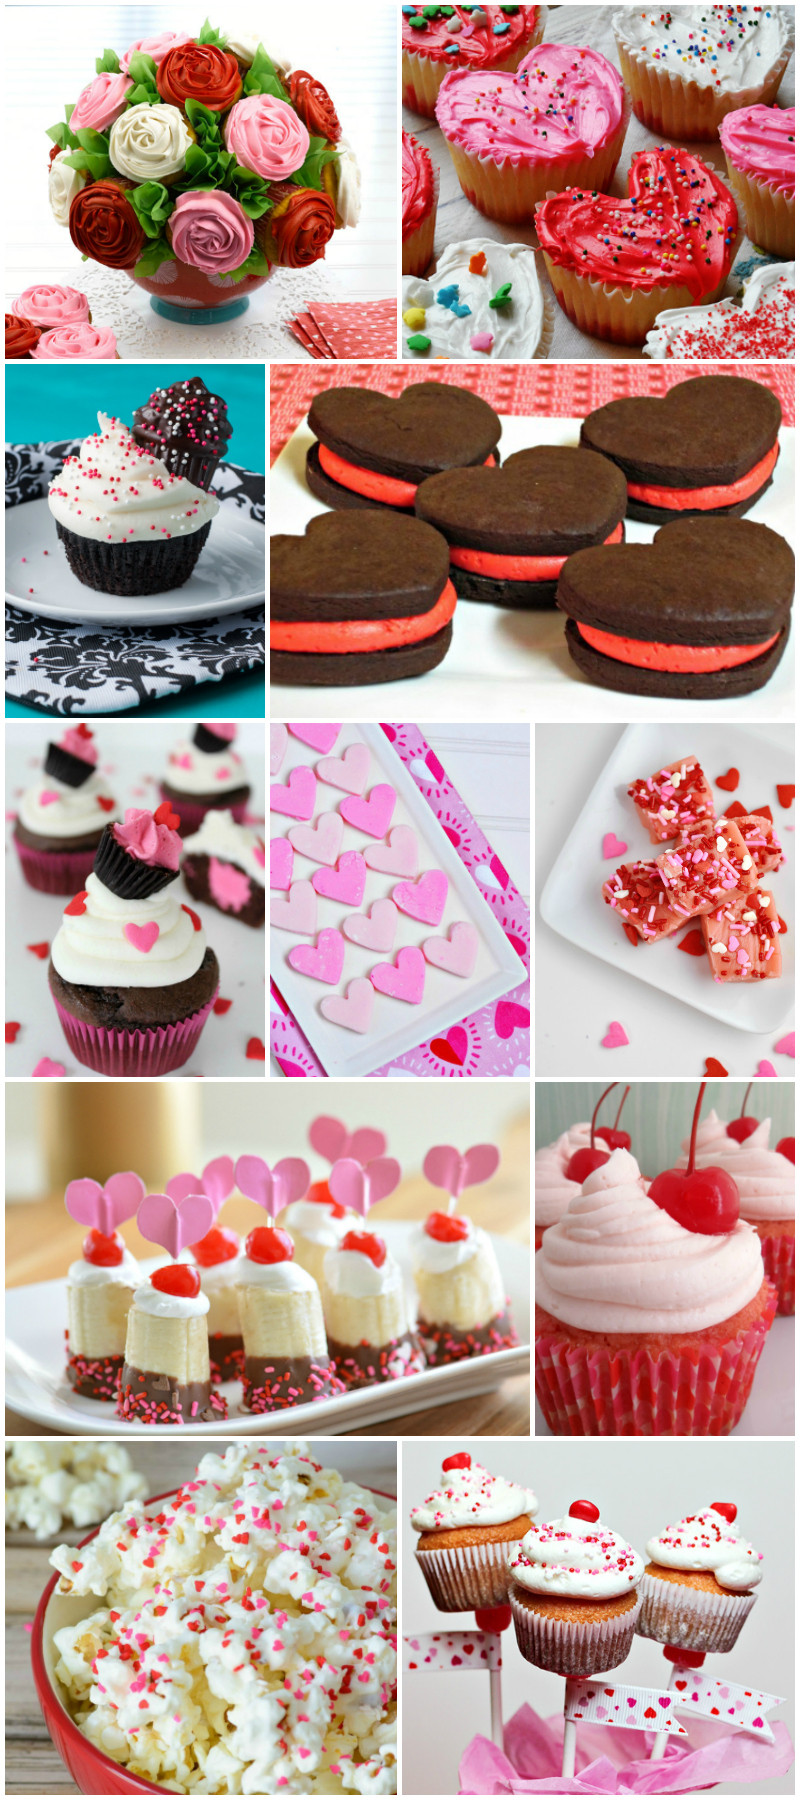 Cute Valentines Day Desserts
 50 Cute and Delicious Valentine’s Day Dessert Recipes